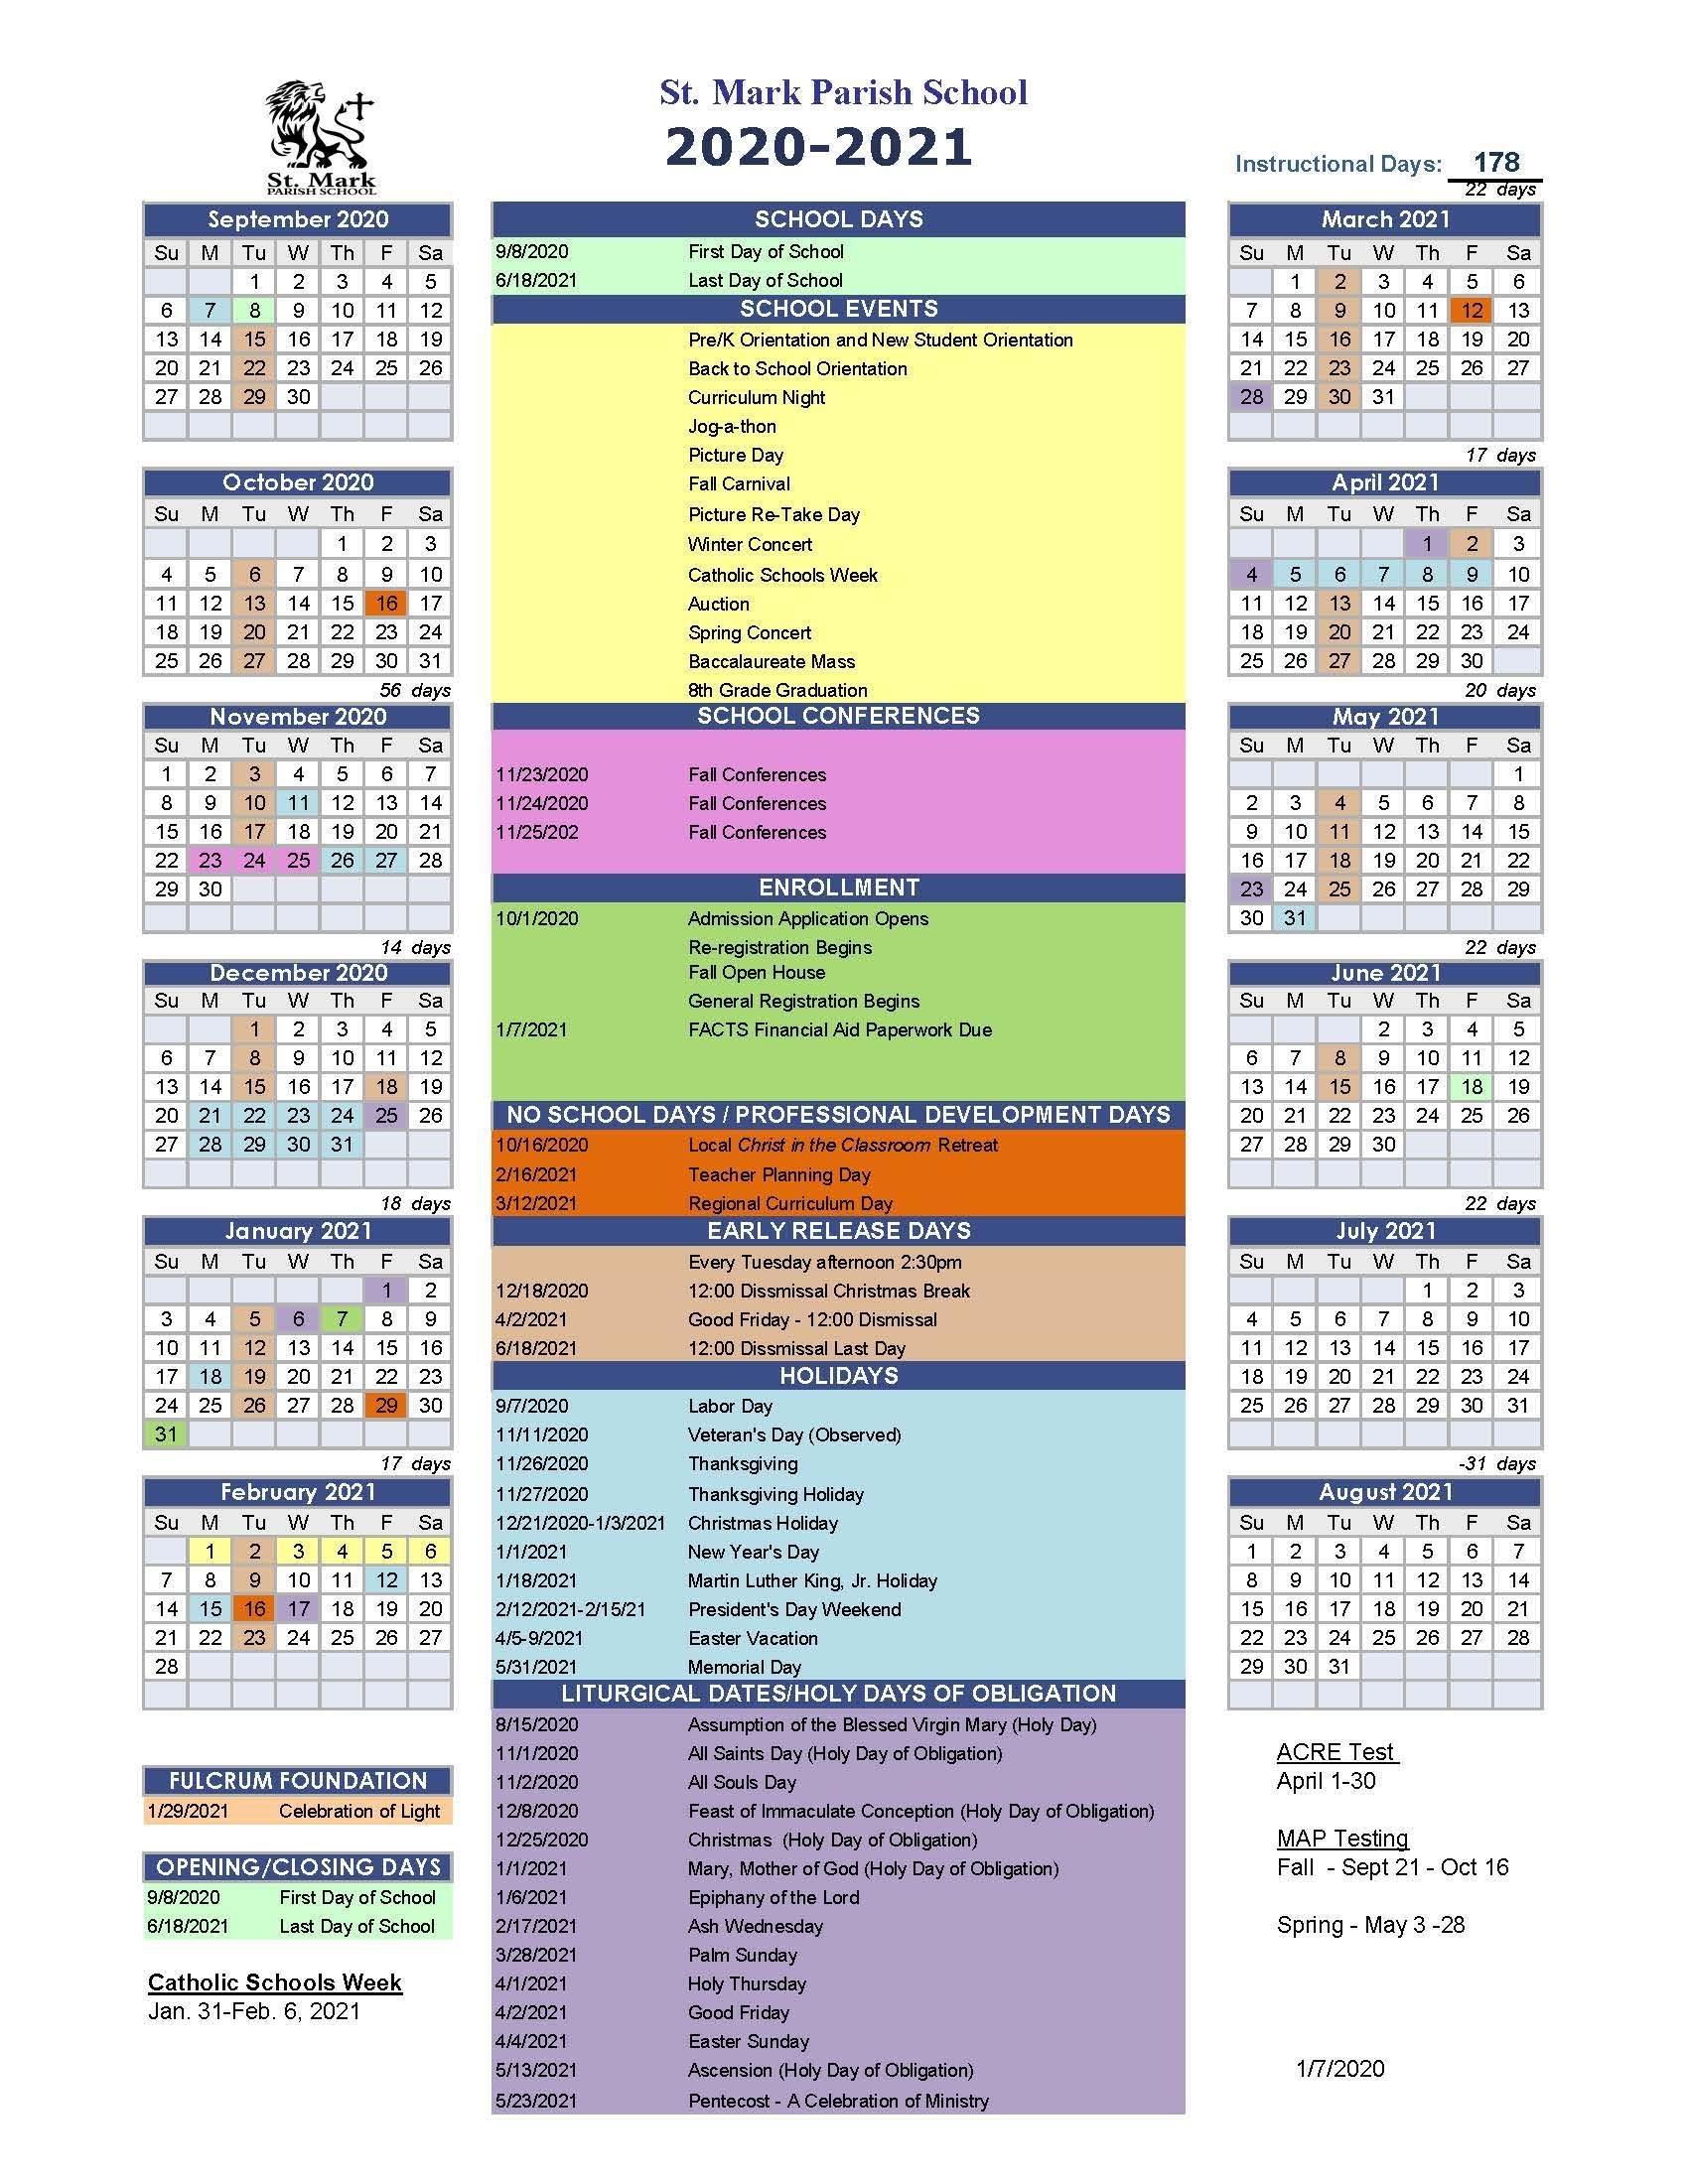 School Calendar 2020 - 2021 - School Calendar 2020 - 2021